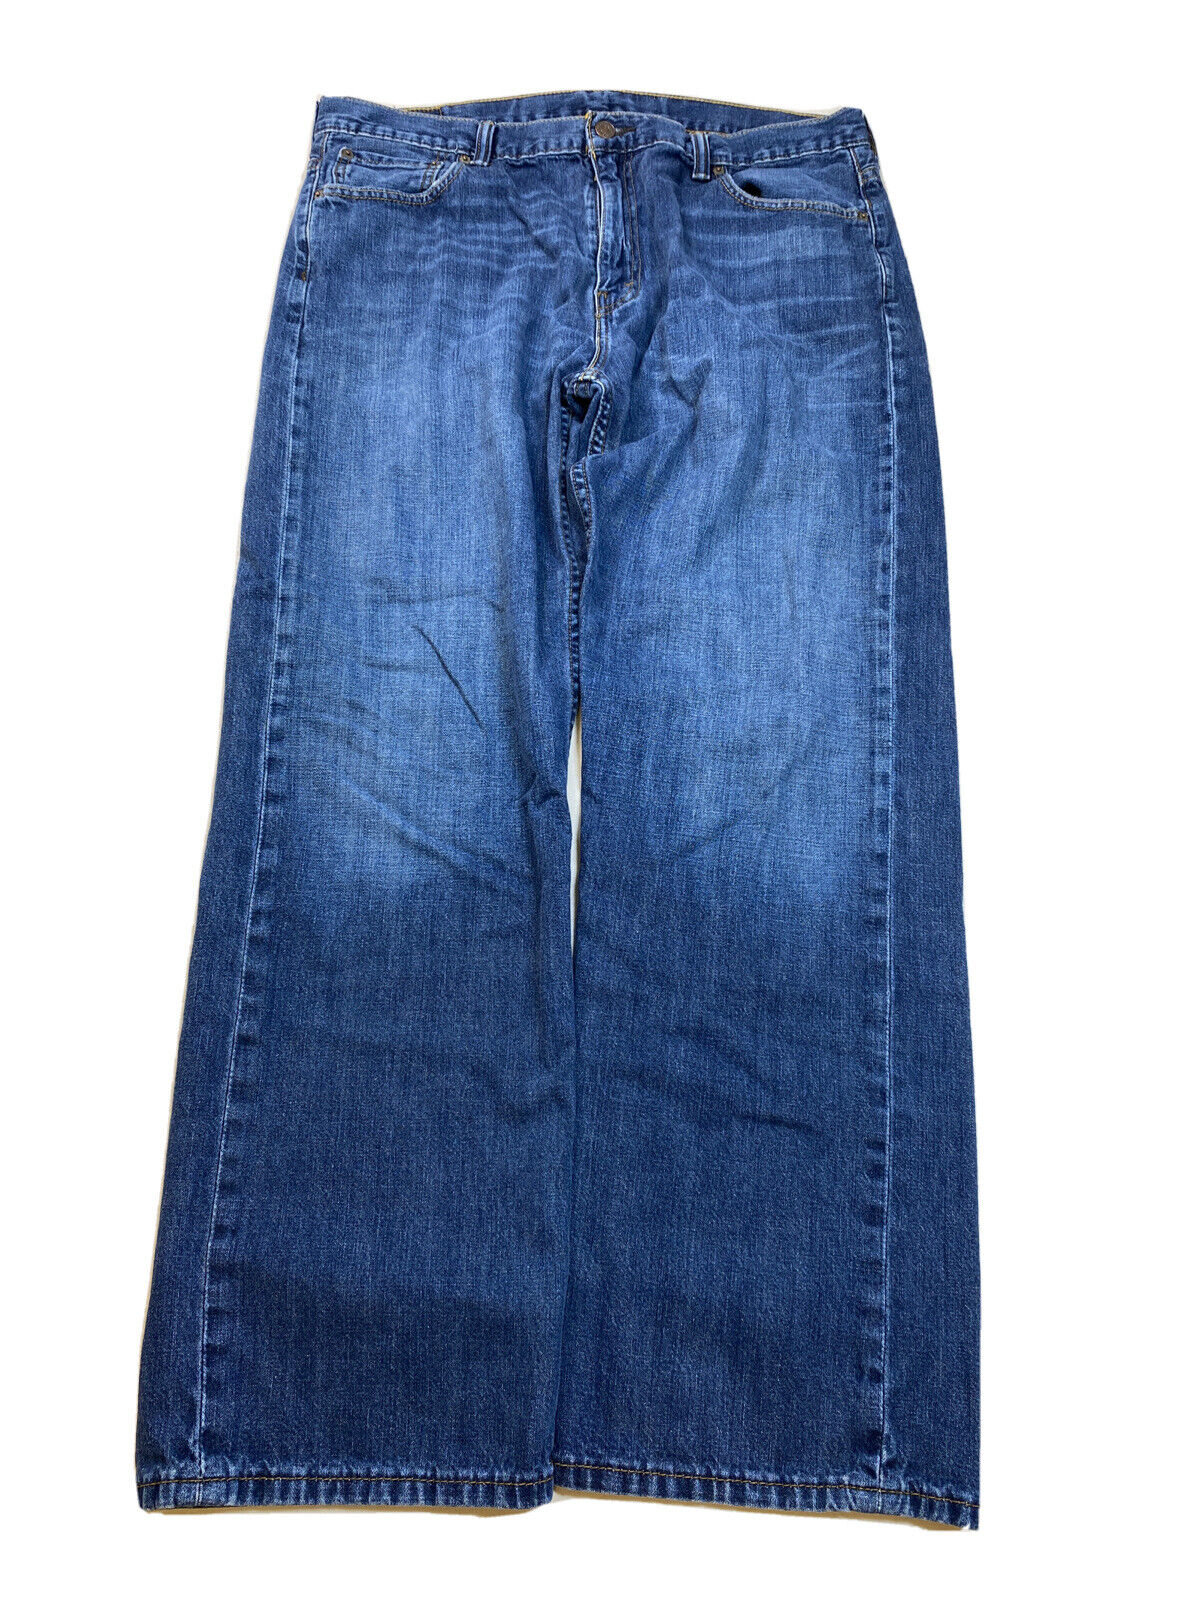 Levis Men's Medium Wash 569 Straight Fit Denim Jeans - 36x32